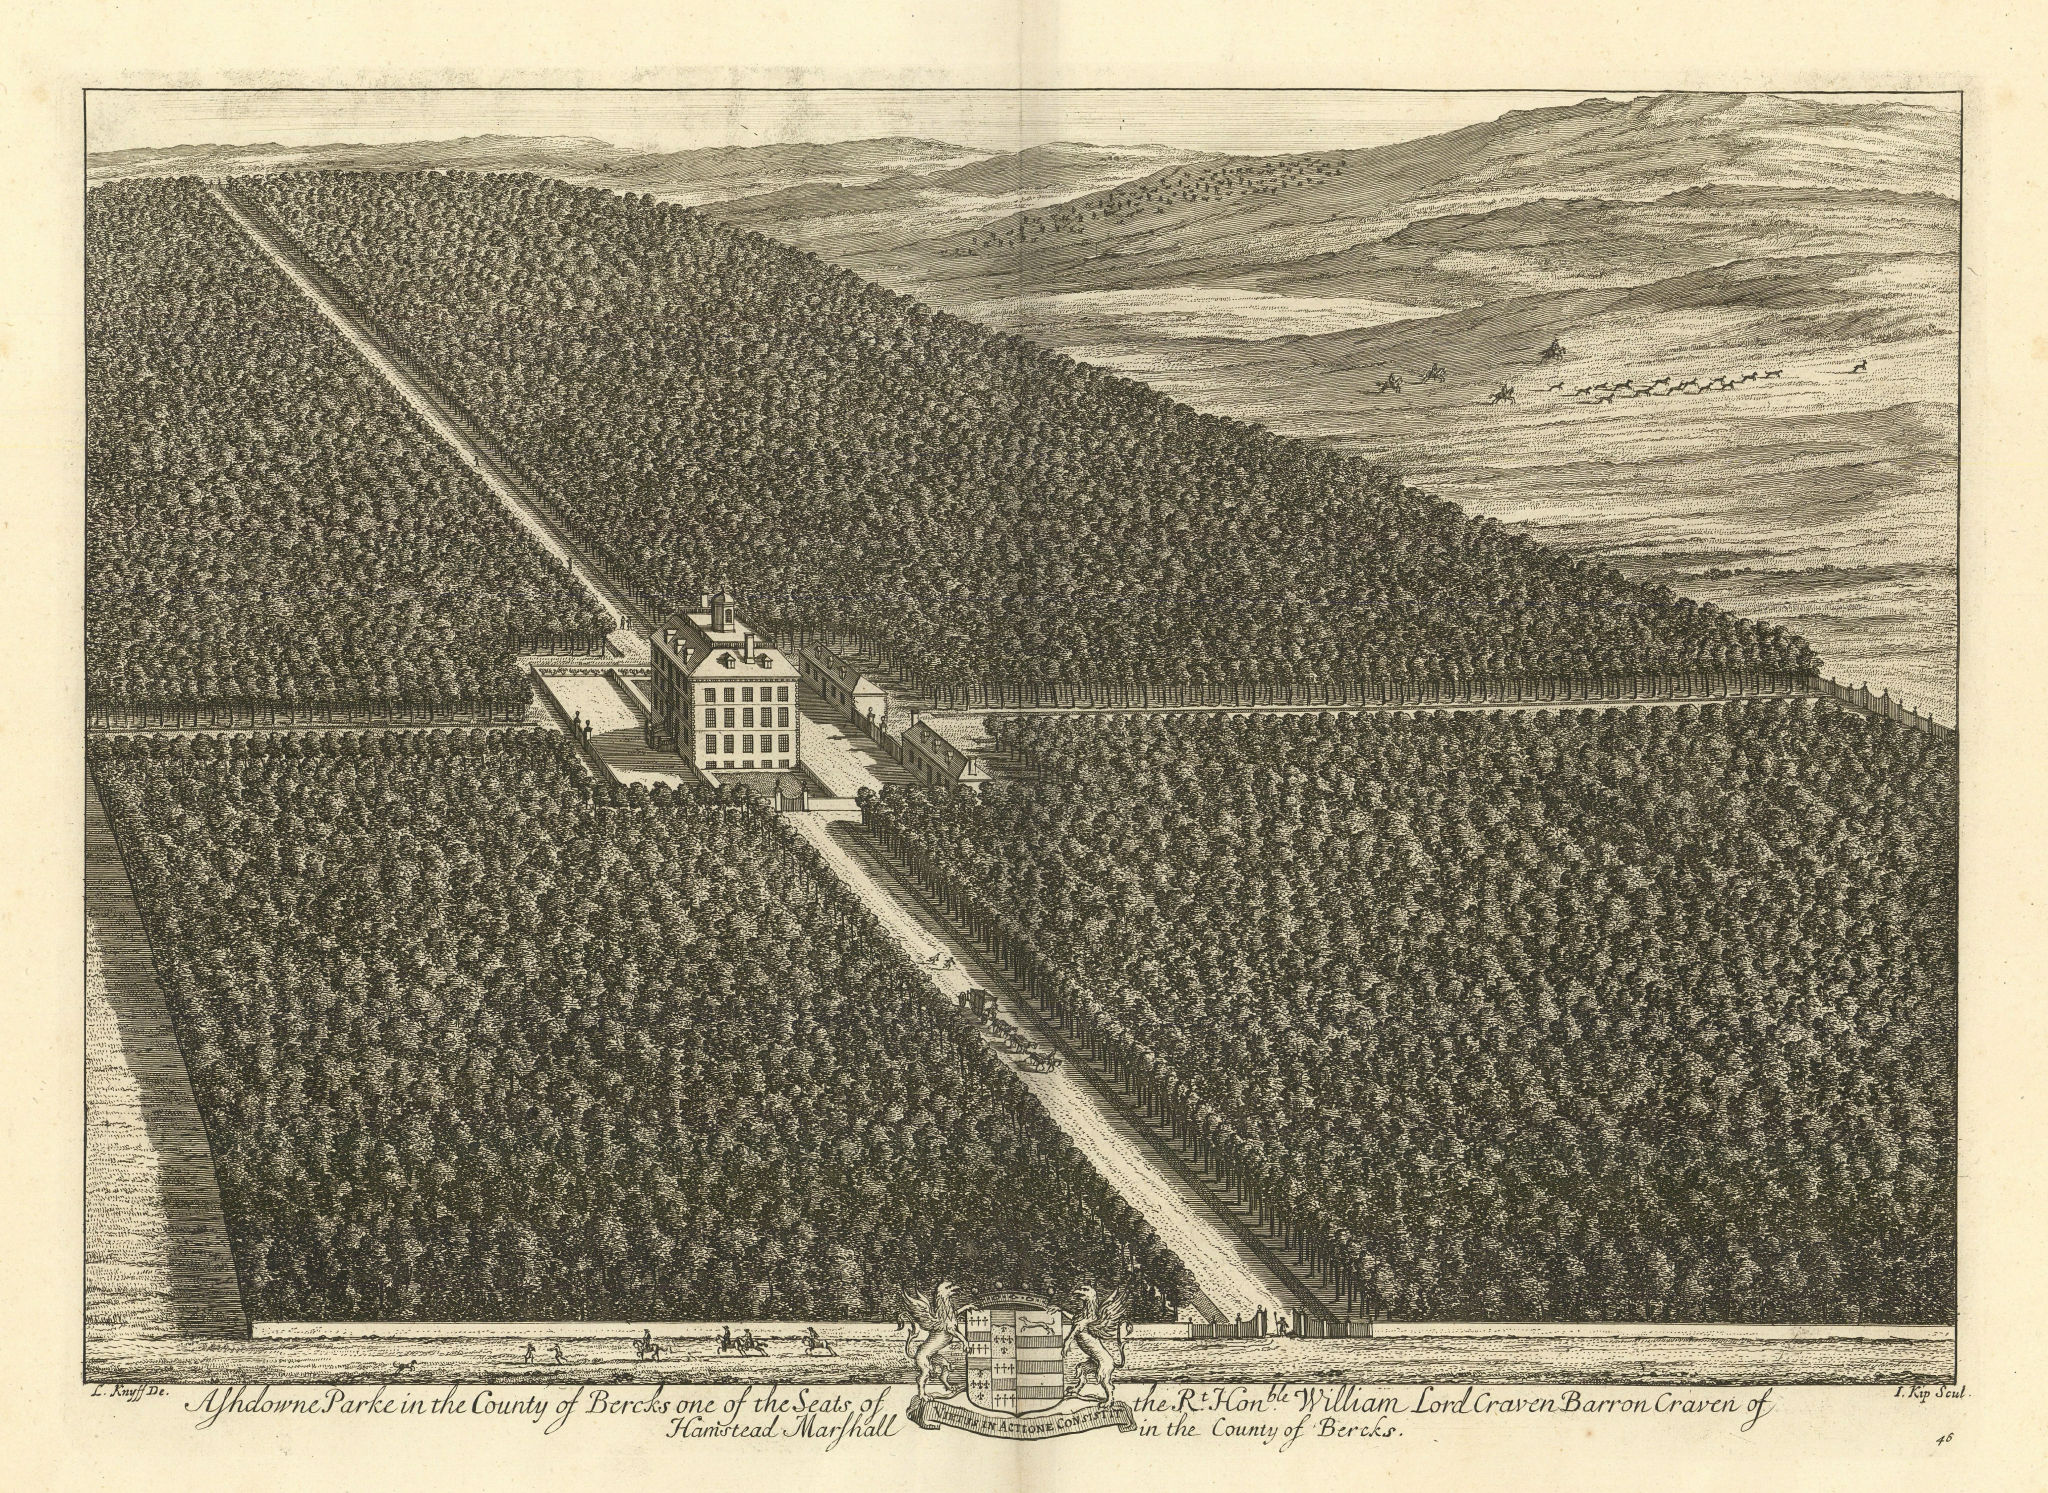 Ashdown Park, Ashbury. Kip/Knyff. "Ashdowne Parke in the County of Bercks" 1709